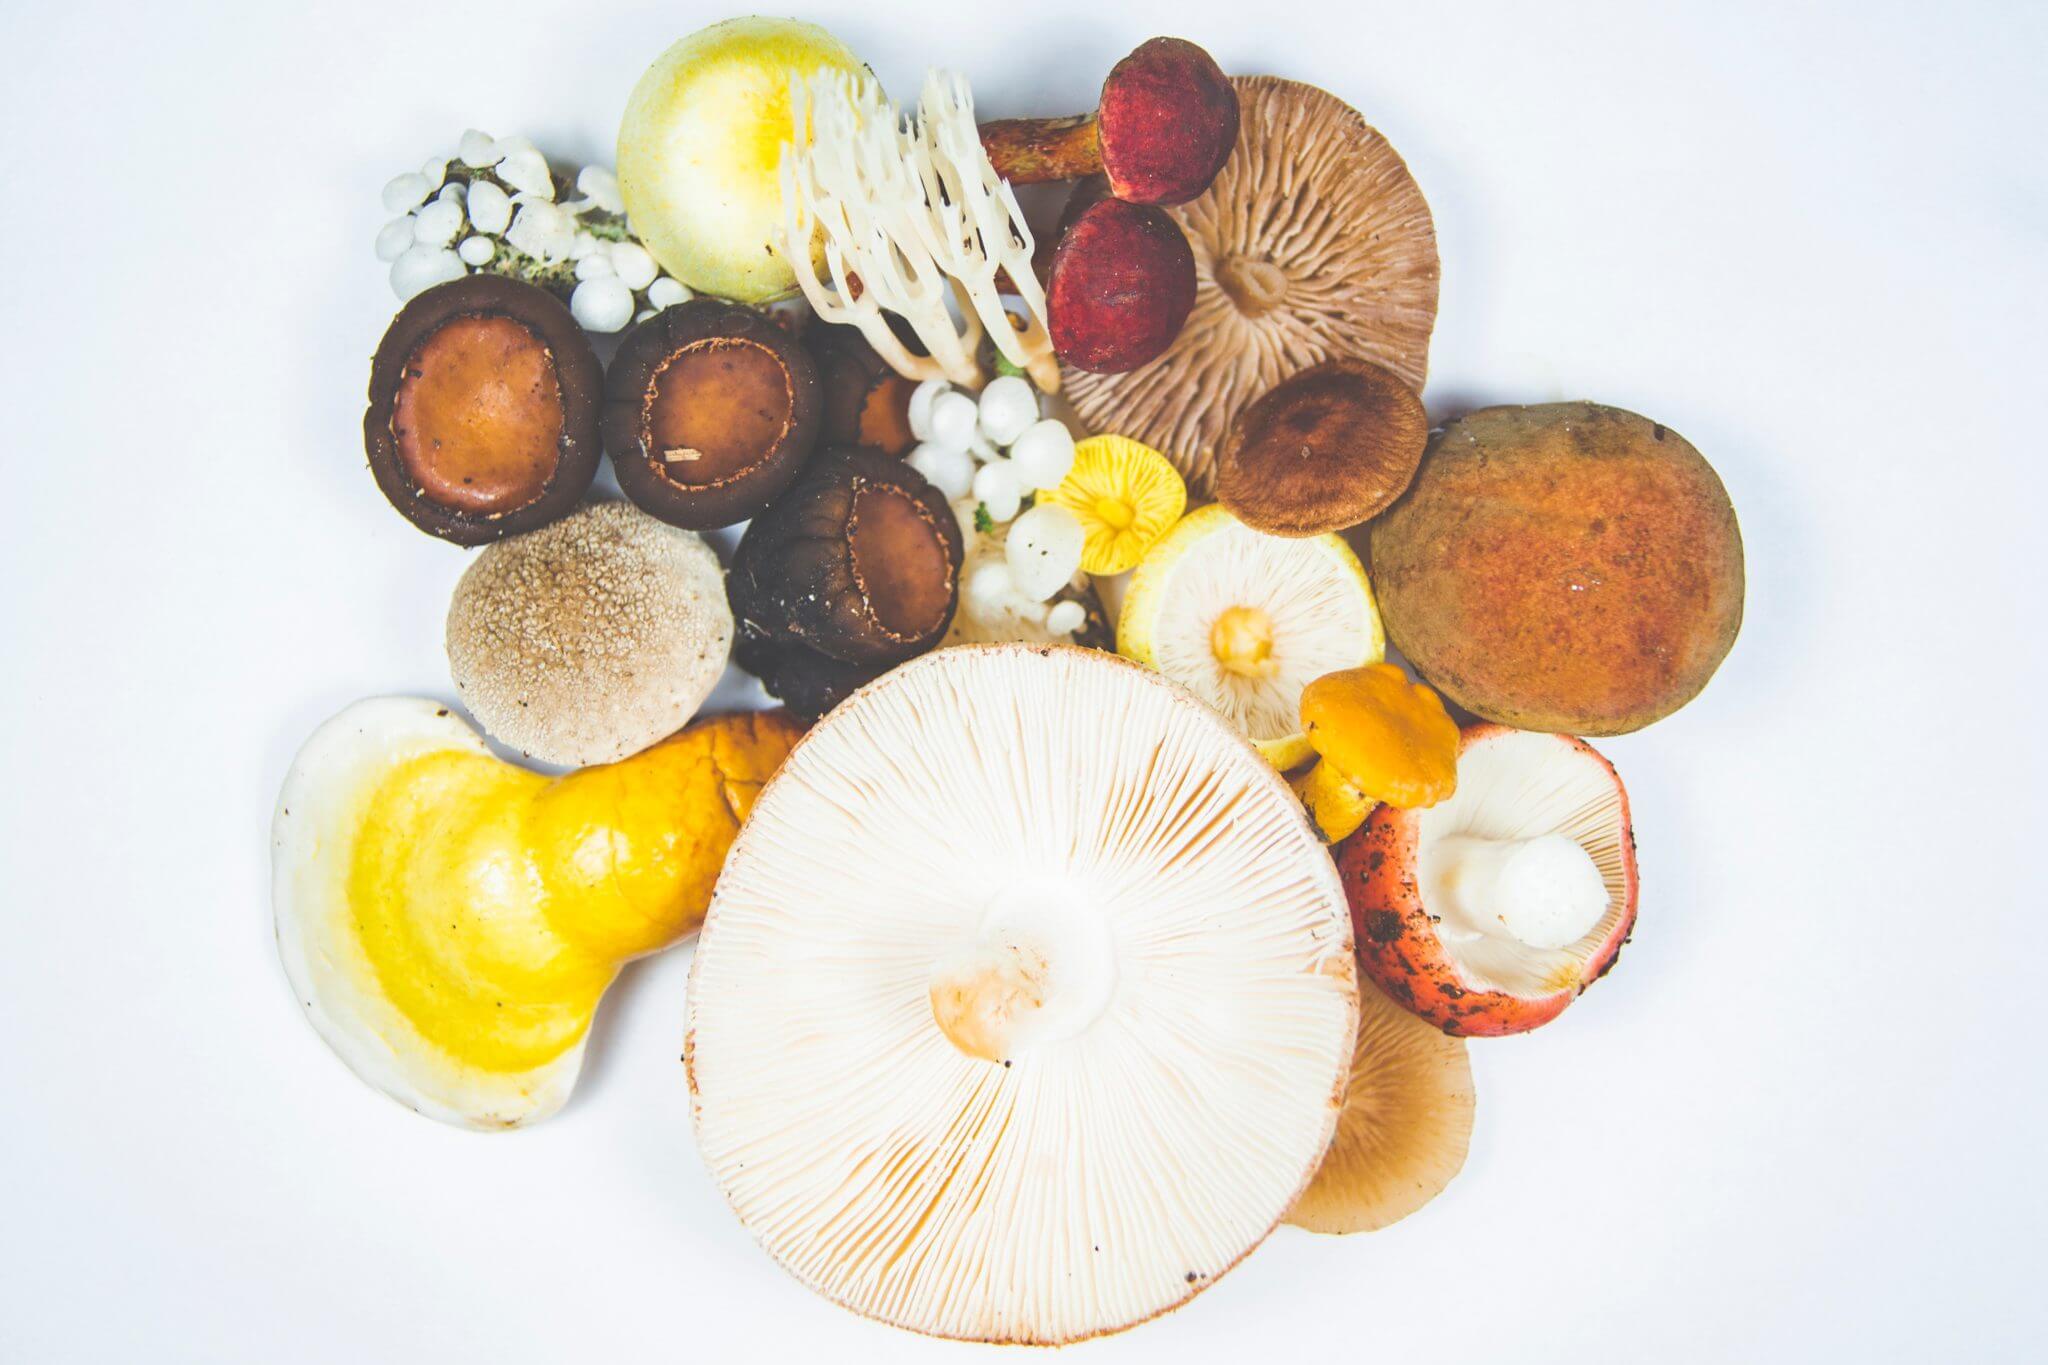 mushroom health benefits